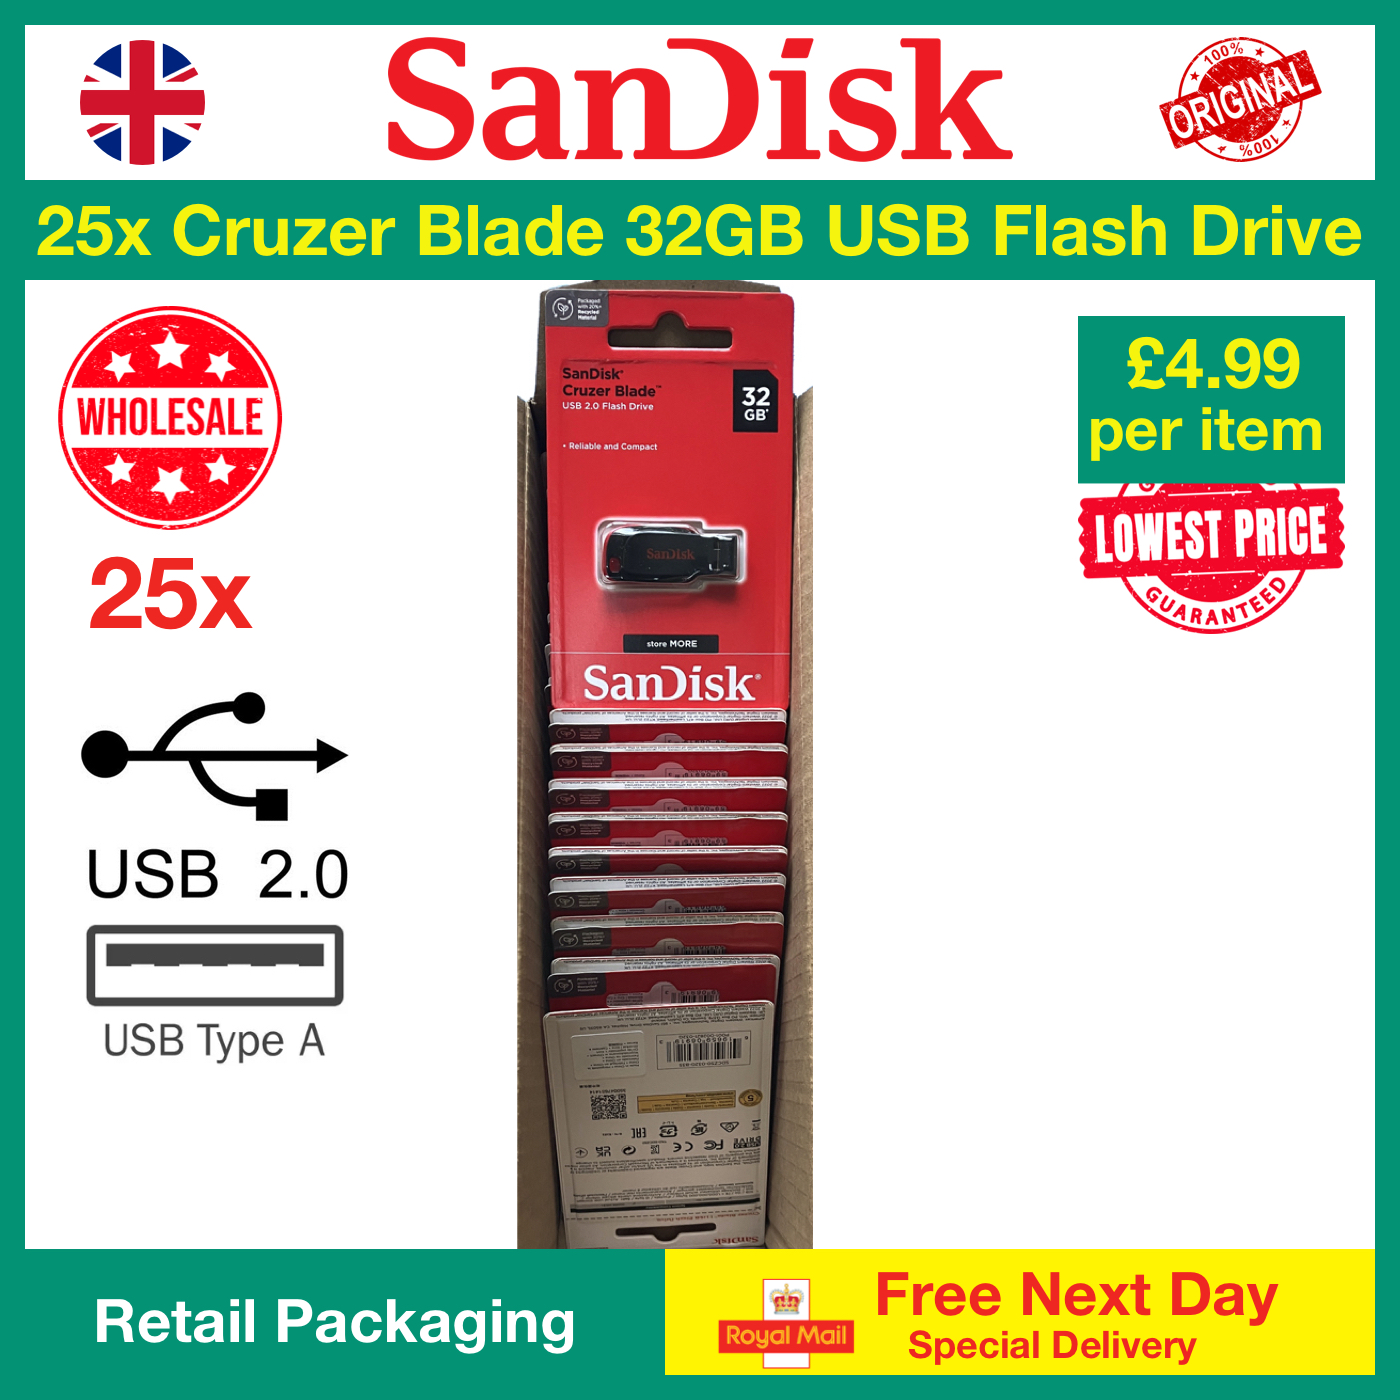 25x SanDisk Cruzer Blade 32GB USB Flash Drive Wholesale